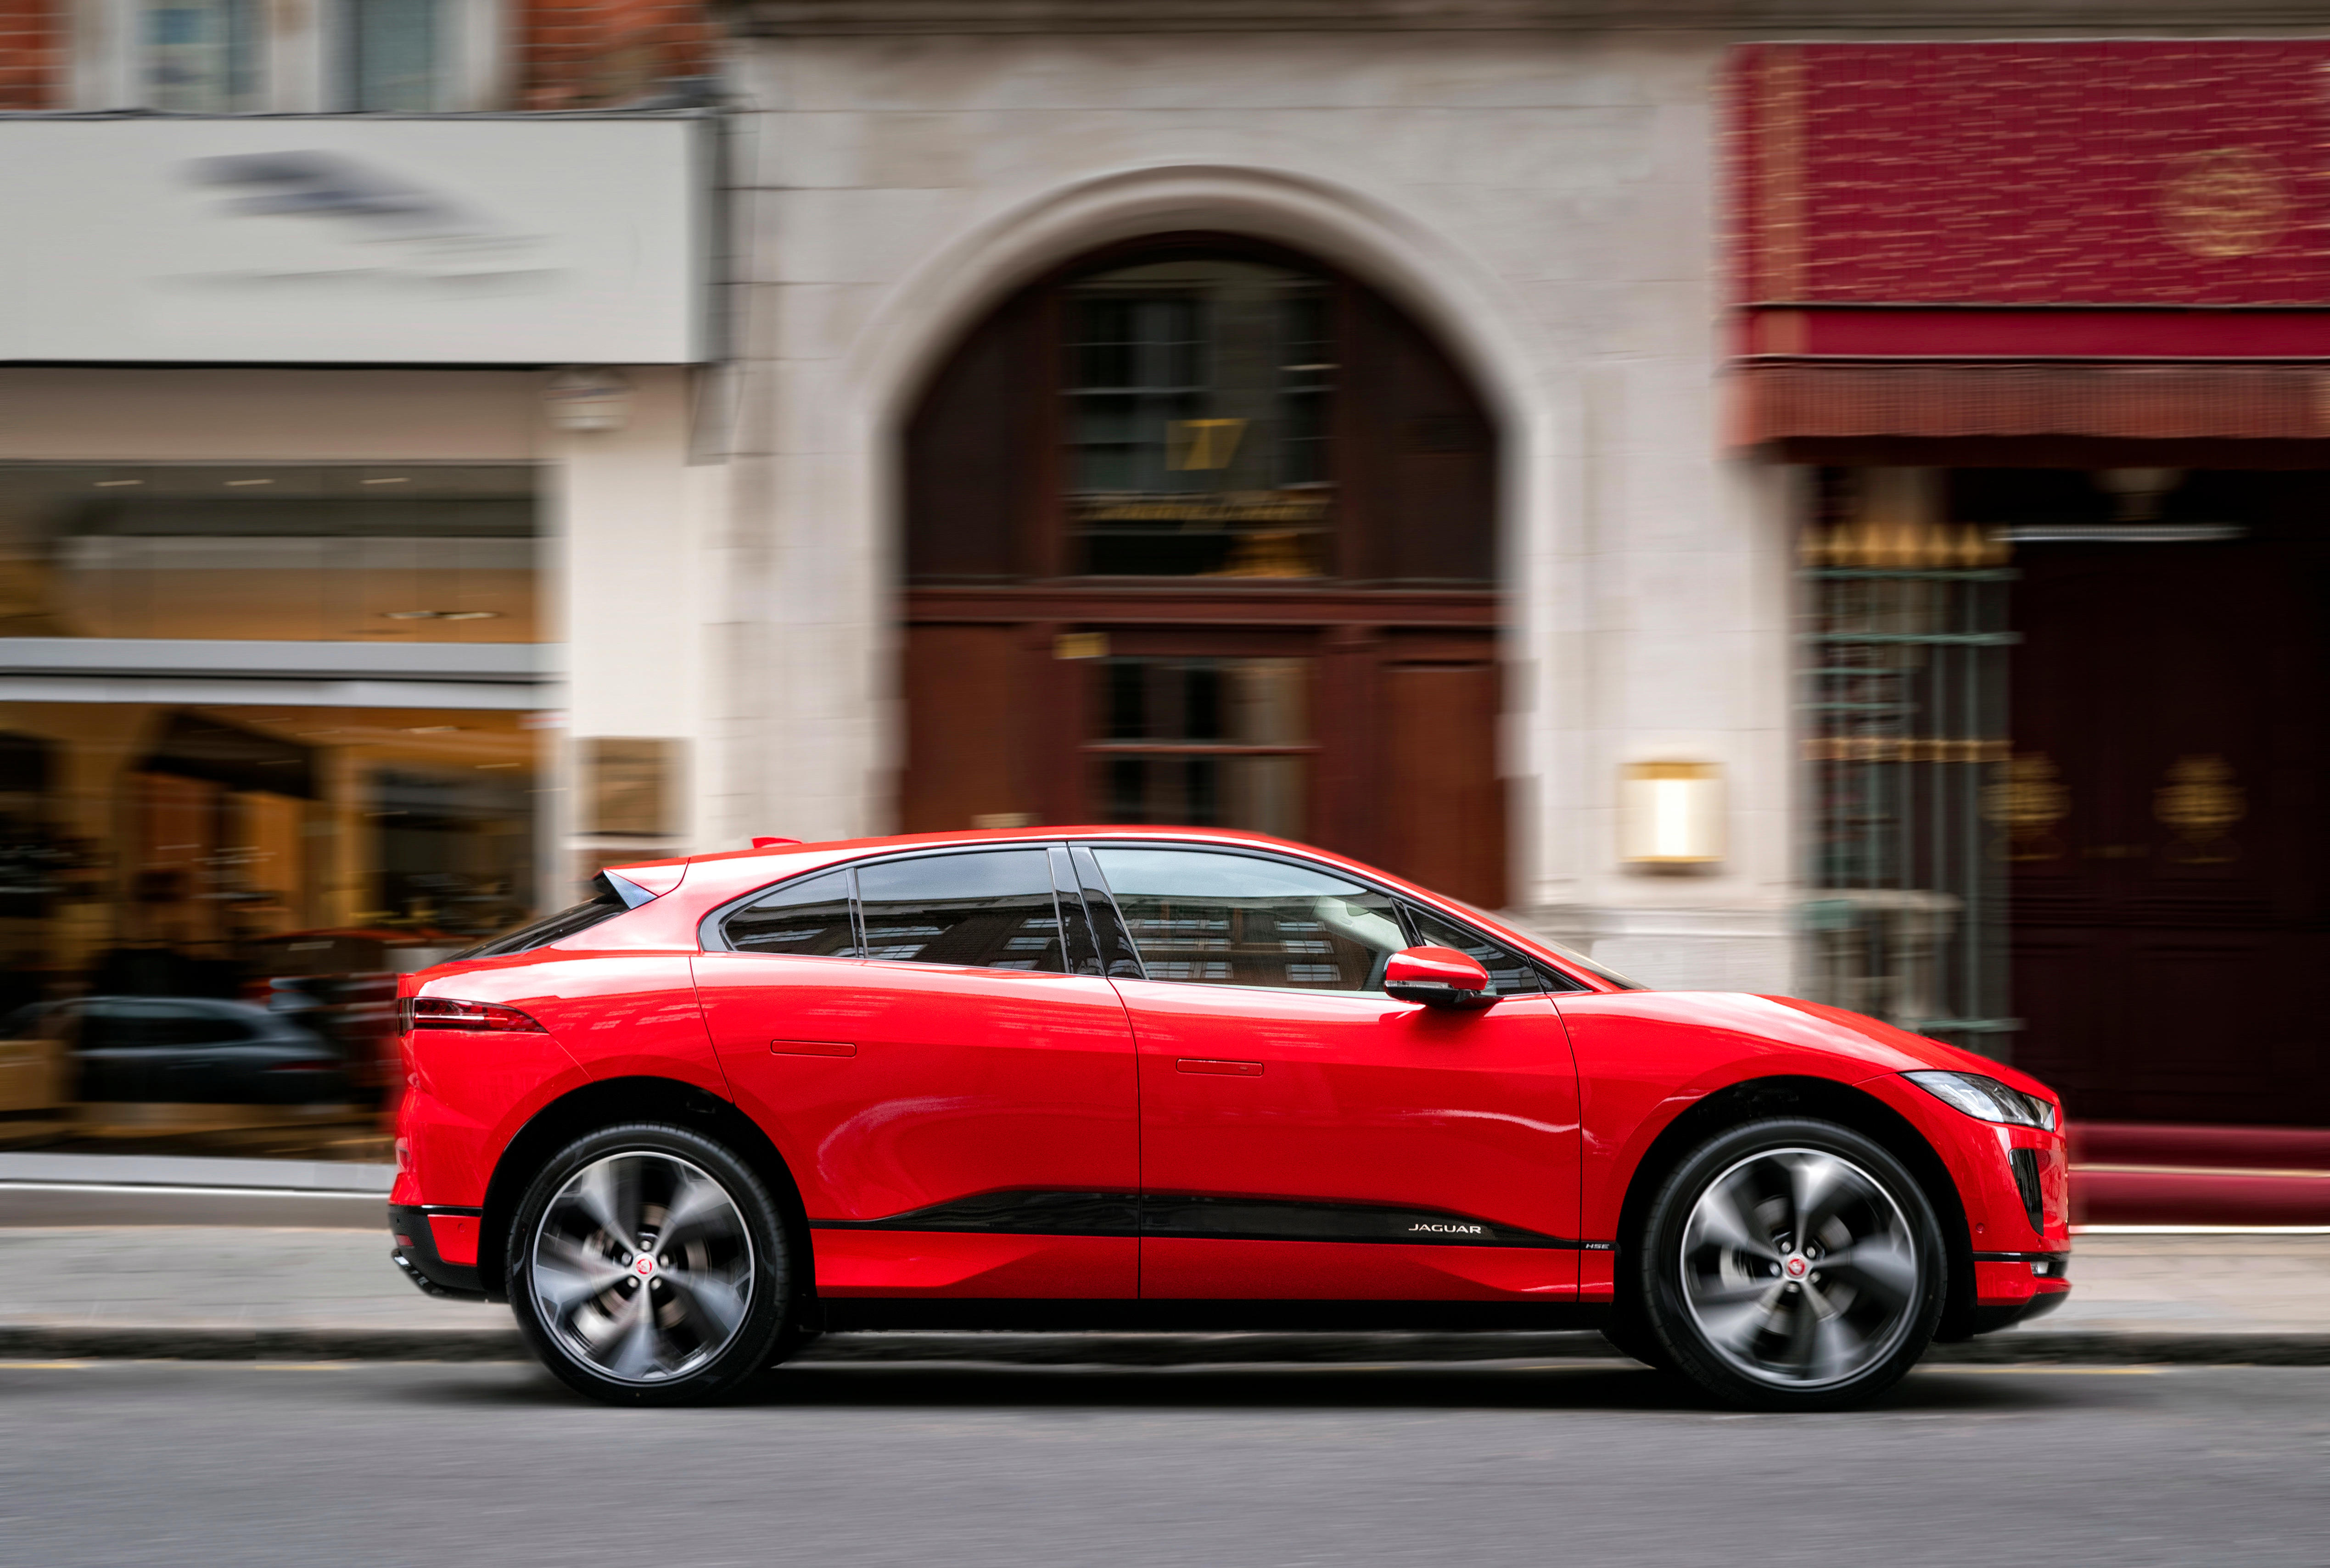 Jaguar i Pace electric automobile in London UK